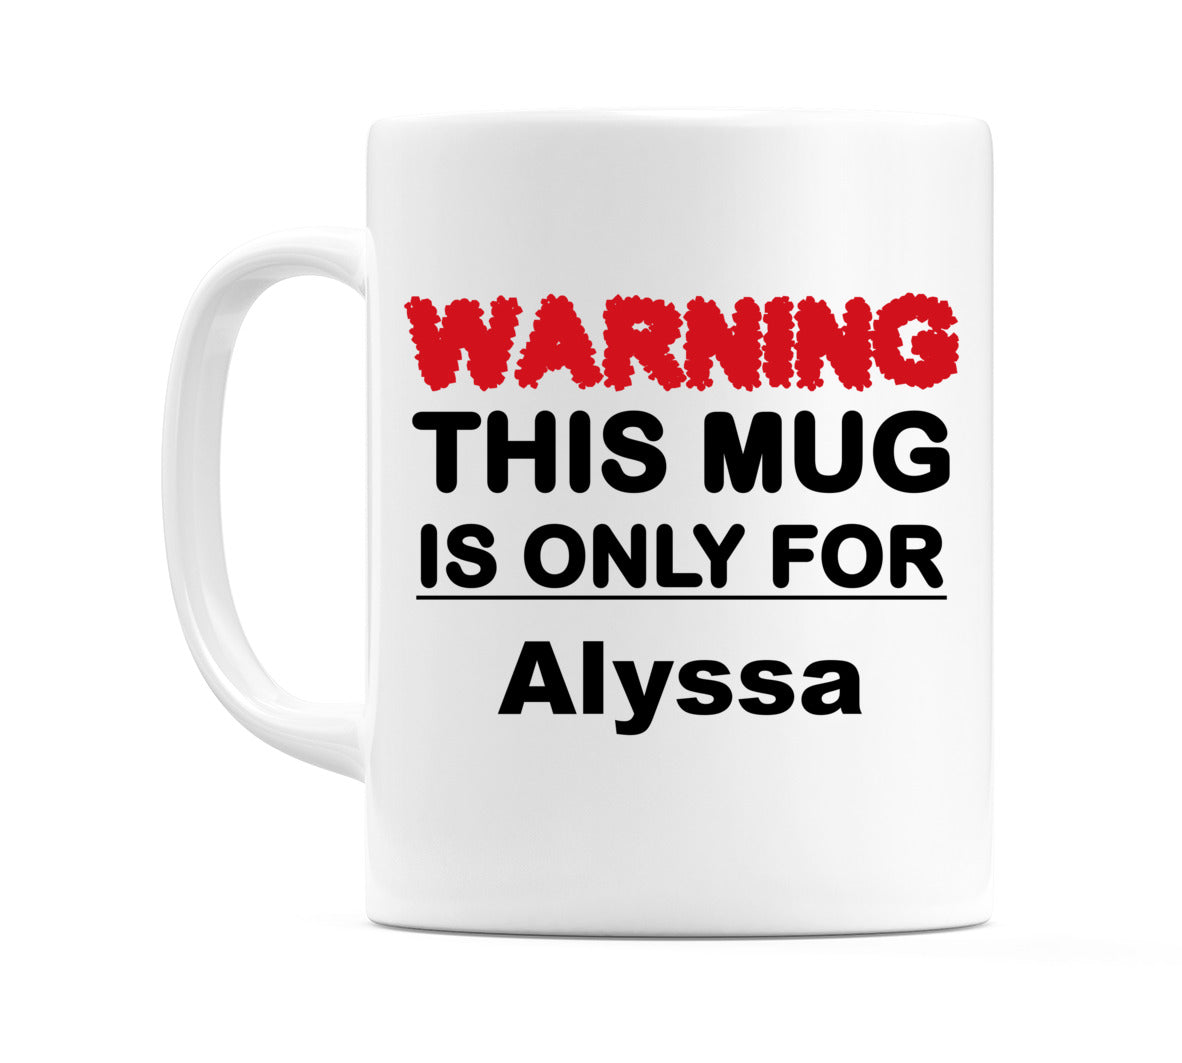 Warning This Mug is ONLY for Alyssa Mug